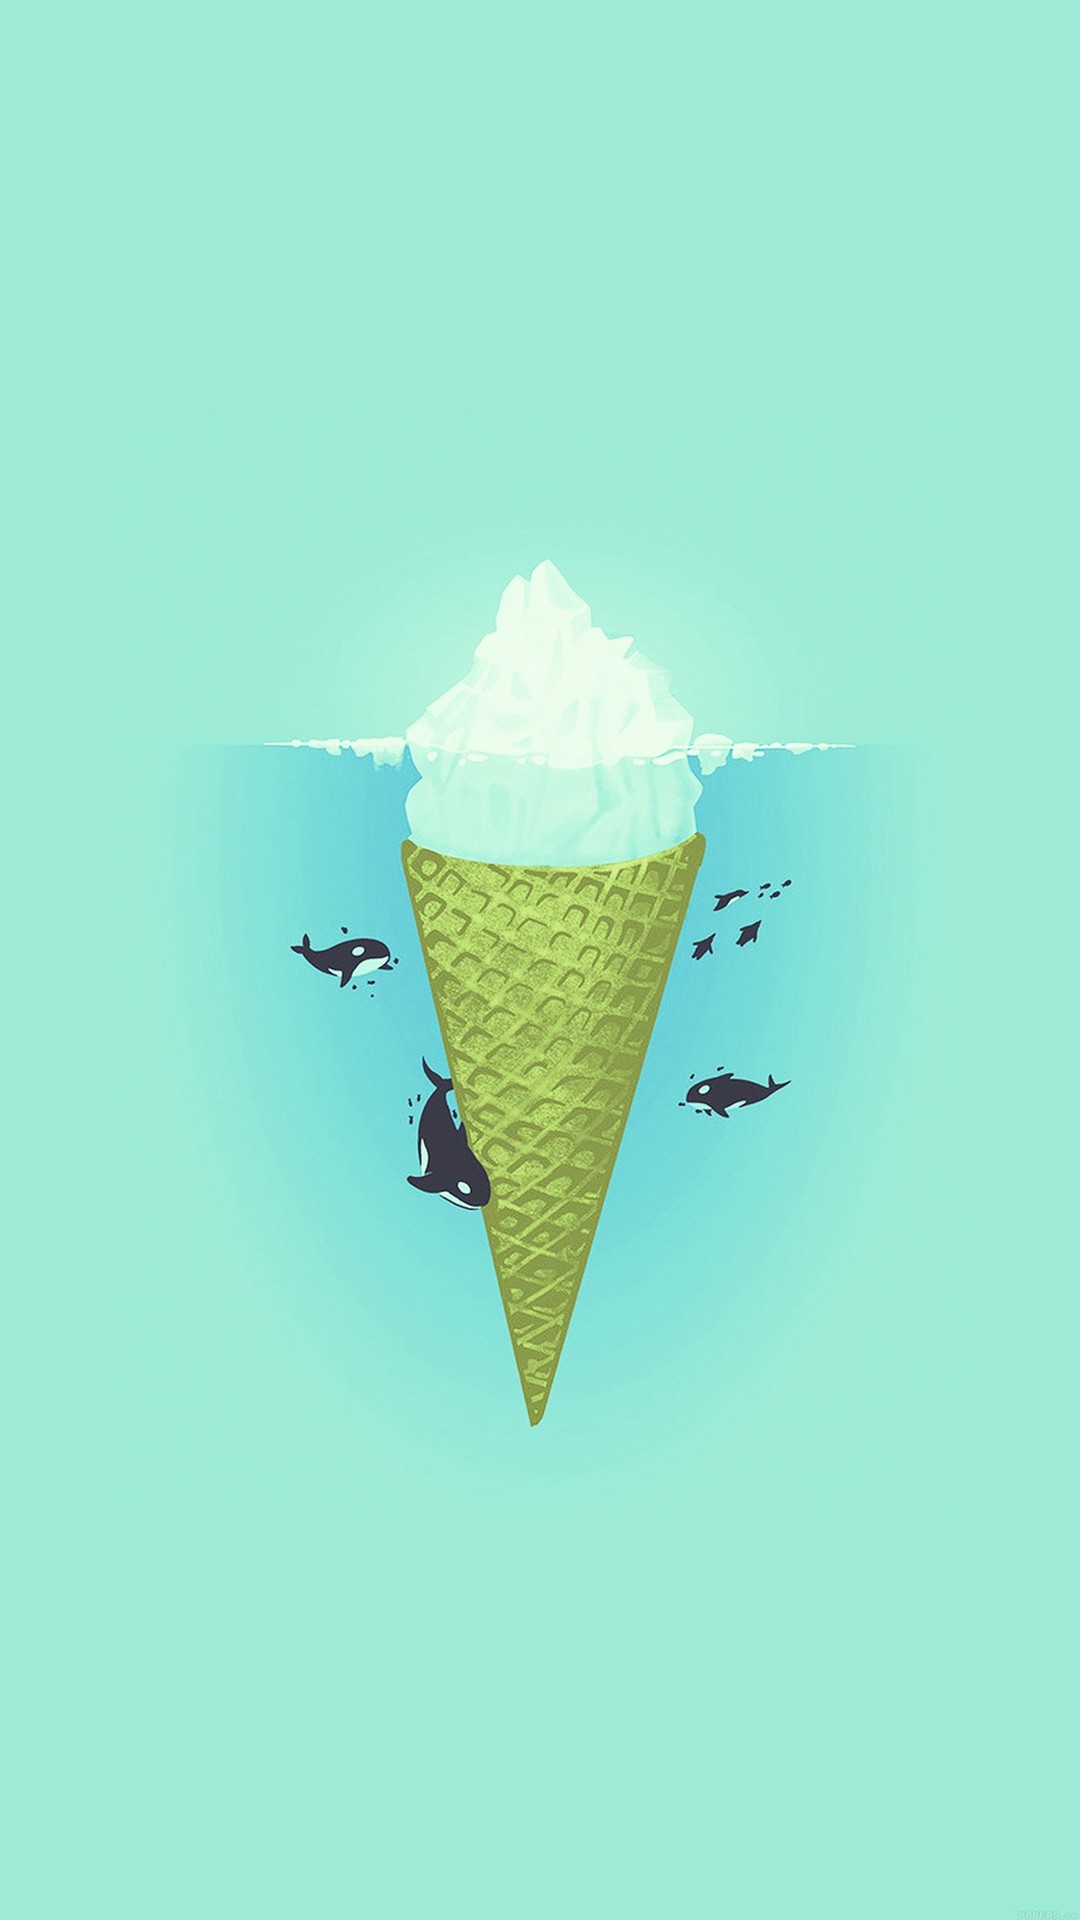 17+] Ice Cream Computer Wallpapers - WallpaperSafari